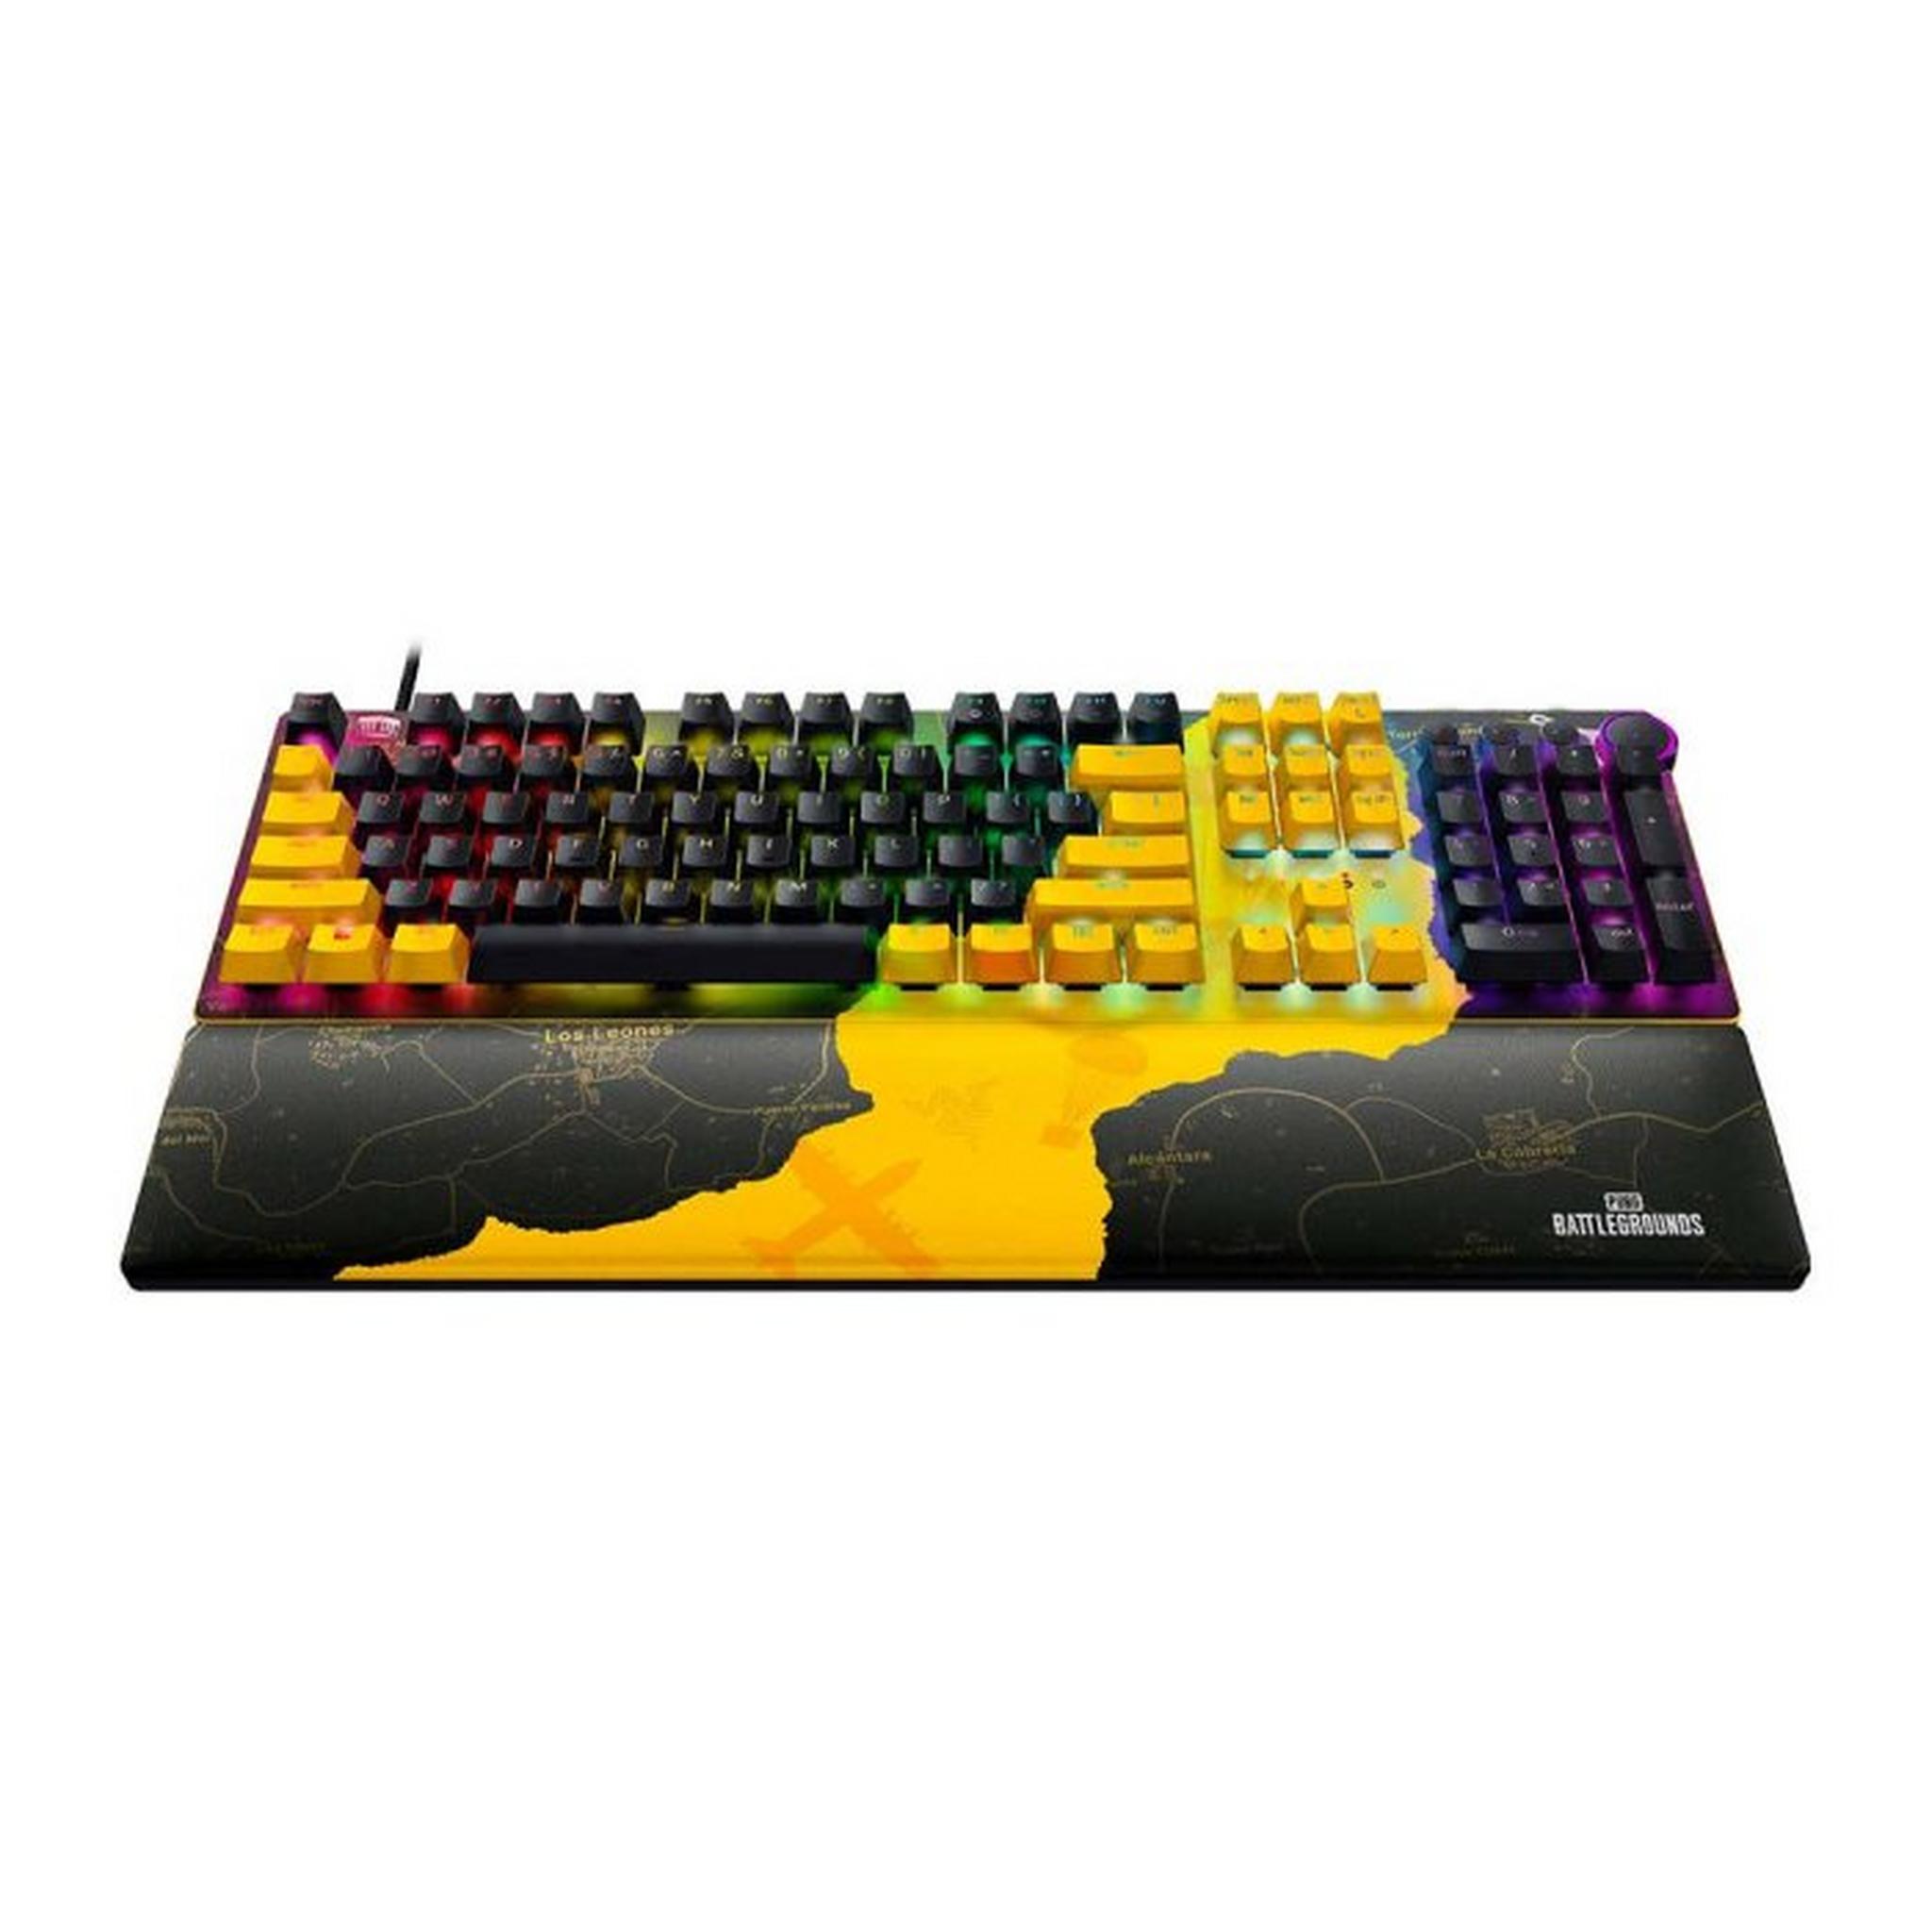 Razer Huntsman V2 Gaming Keyboard, Linear Optical Switch, RZ03-03932300-R3M1 - multicolor